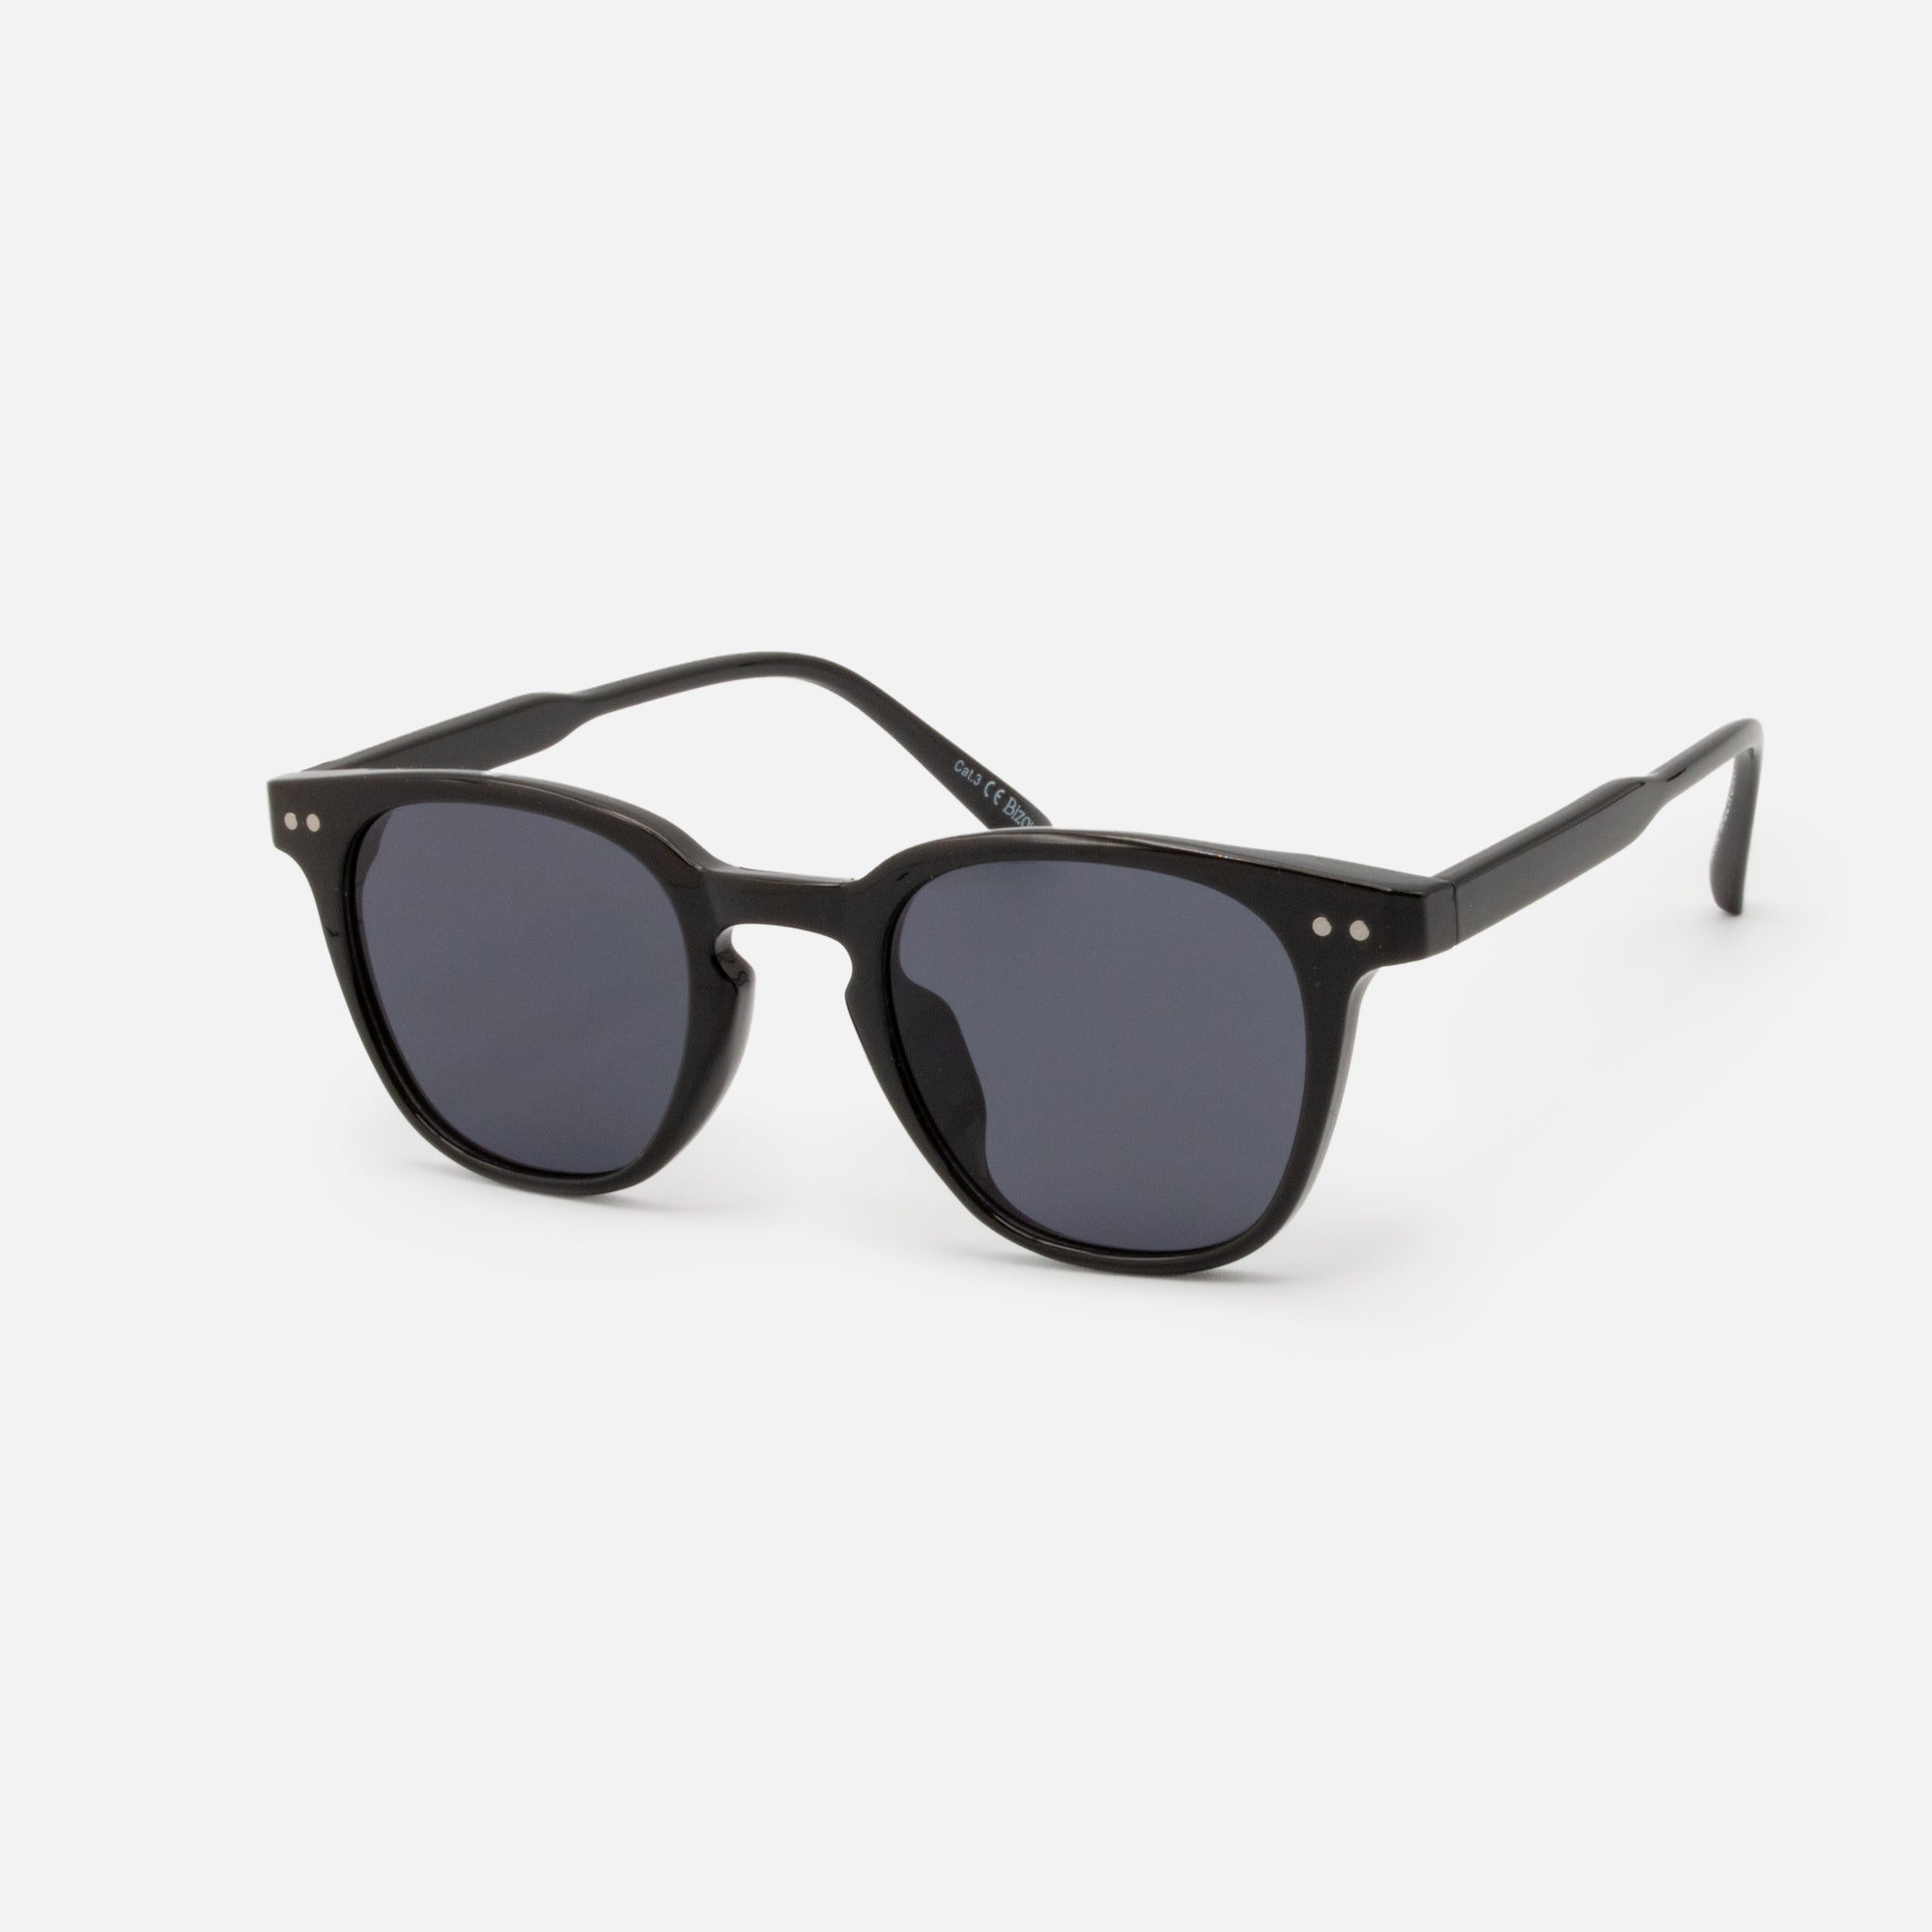 Black small lens sunglasses